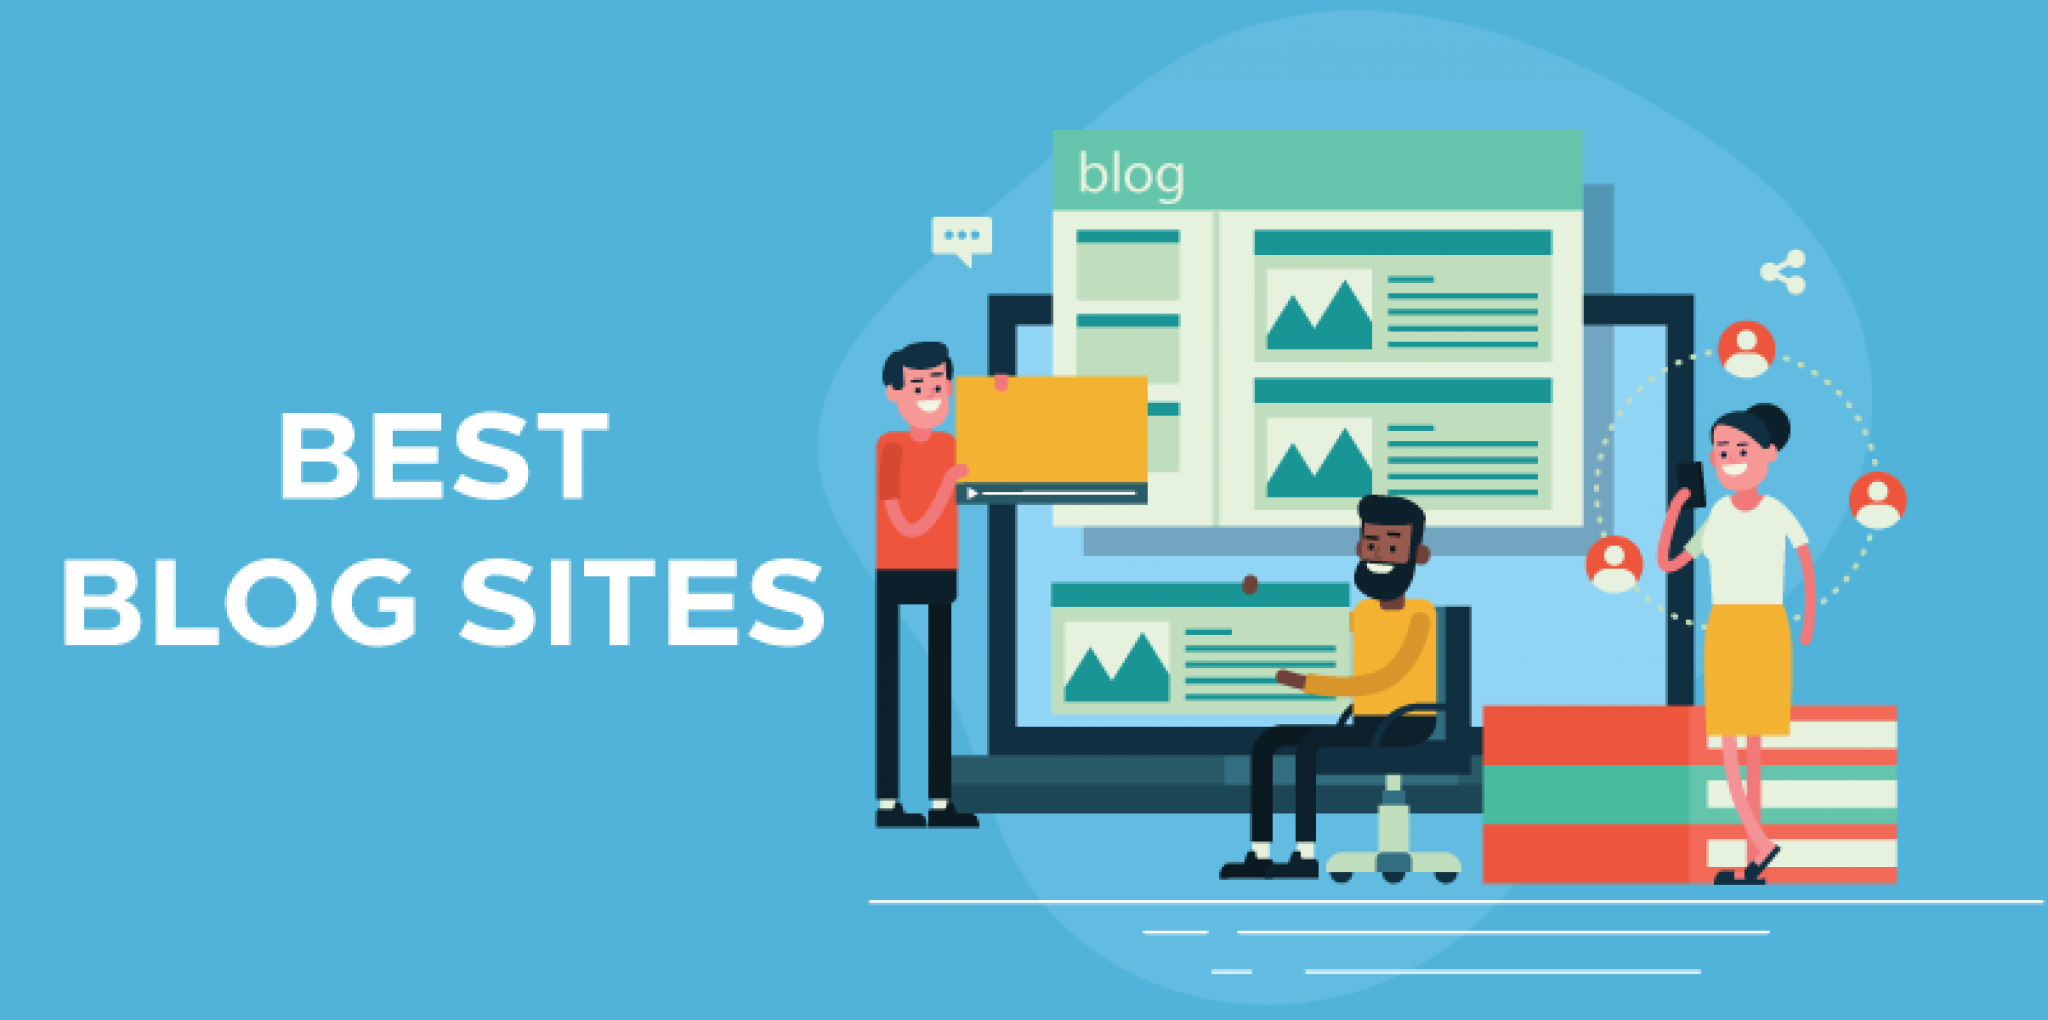 17 Best Blog Sites (2020) WP Clipboard WordPress Resources